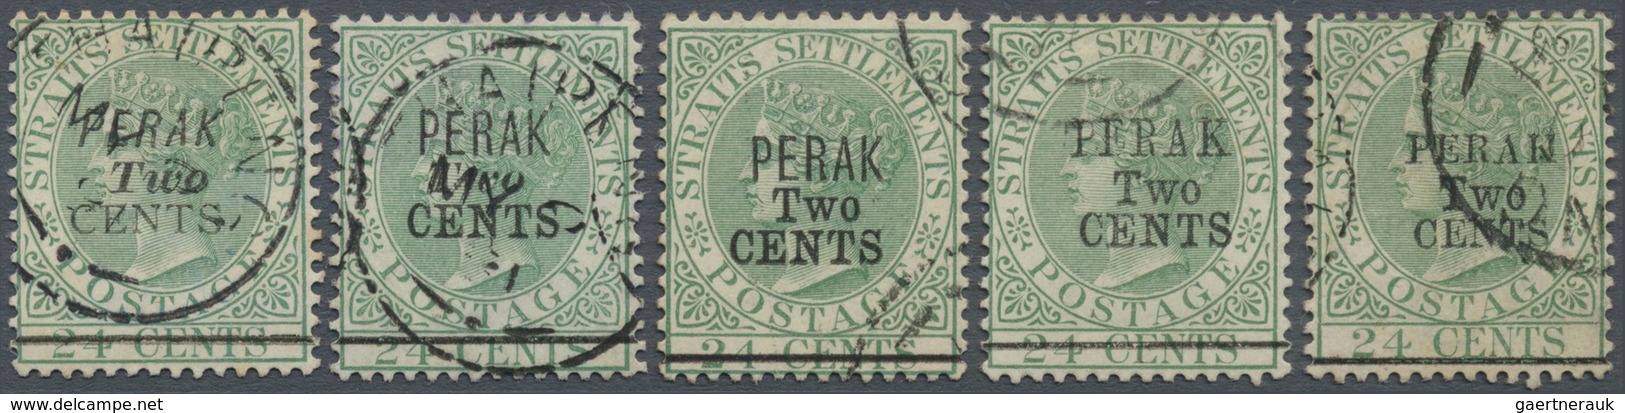 O Malaiische Staaten - Perak: 1891, Straits Settlements QV 24c. Green Wmkd. Crown CA Five Stamps With - Perak